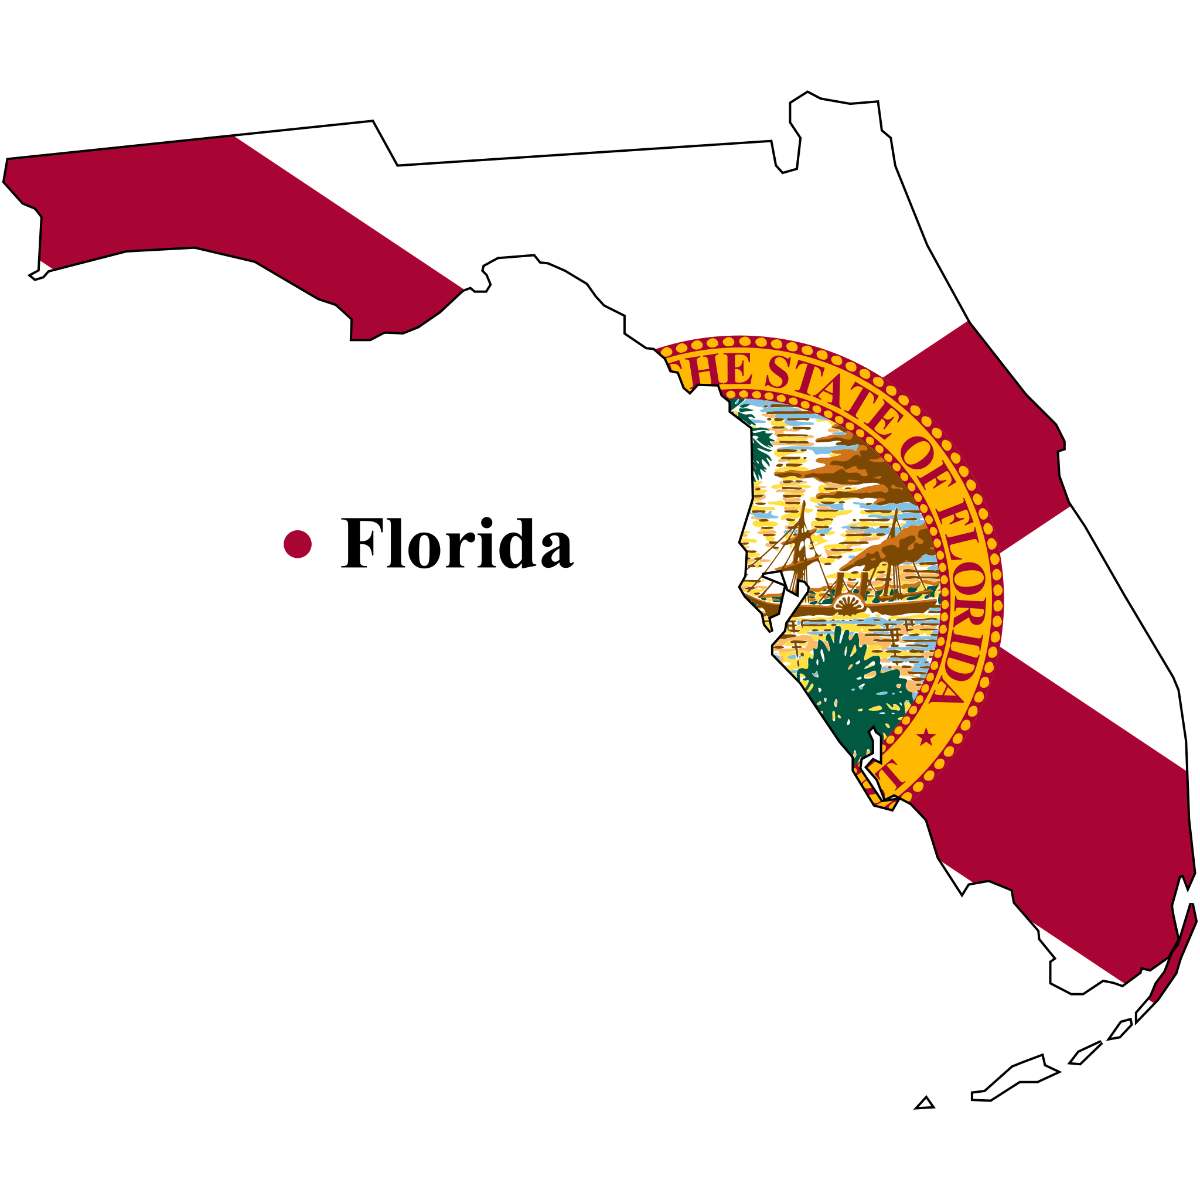 Florida State map cutout with Florida flag superimposed